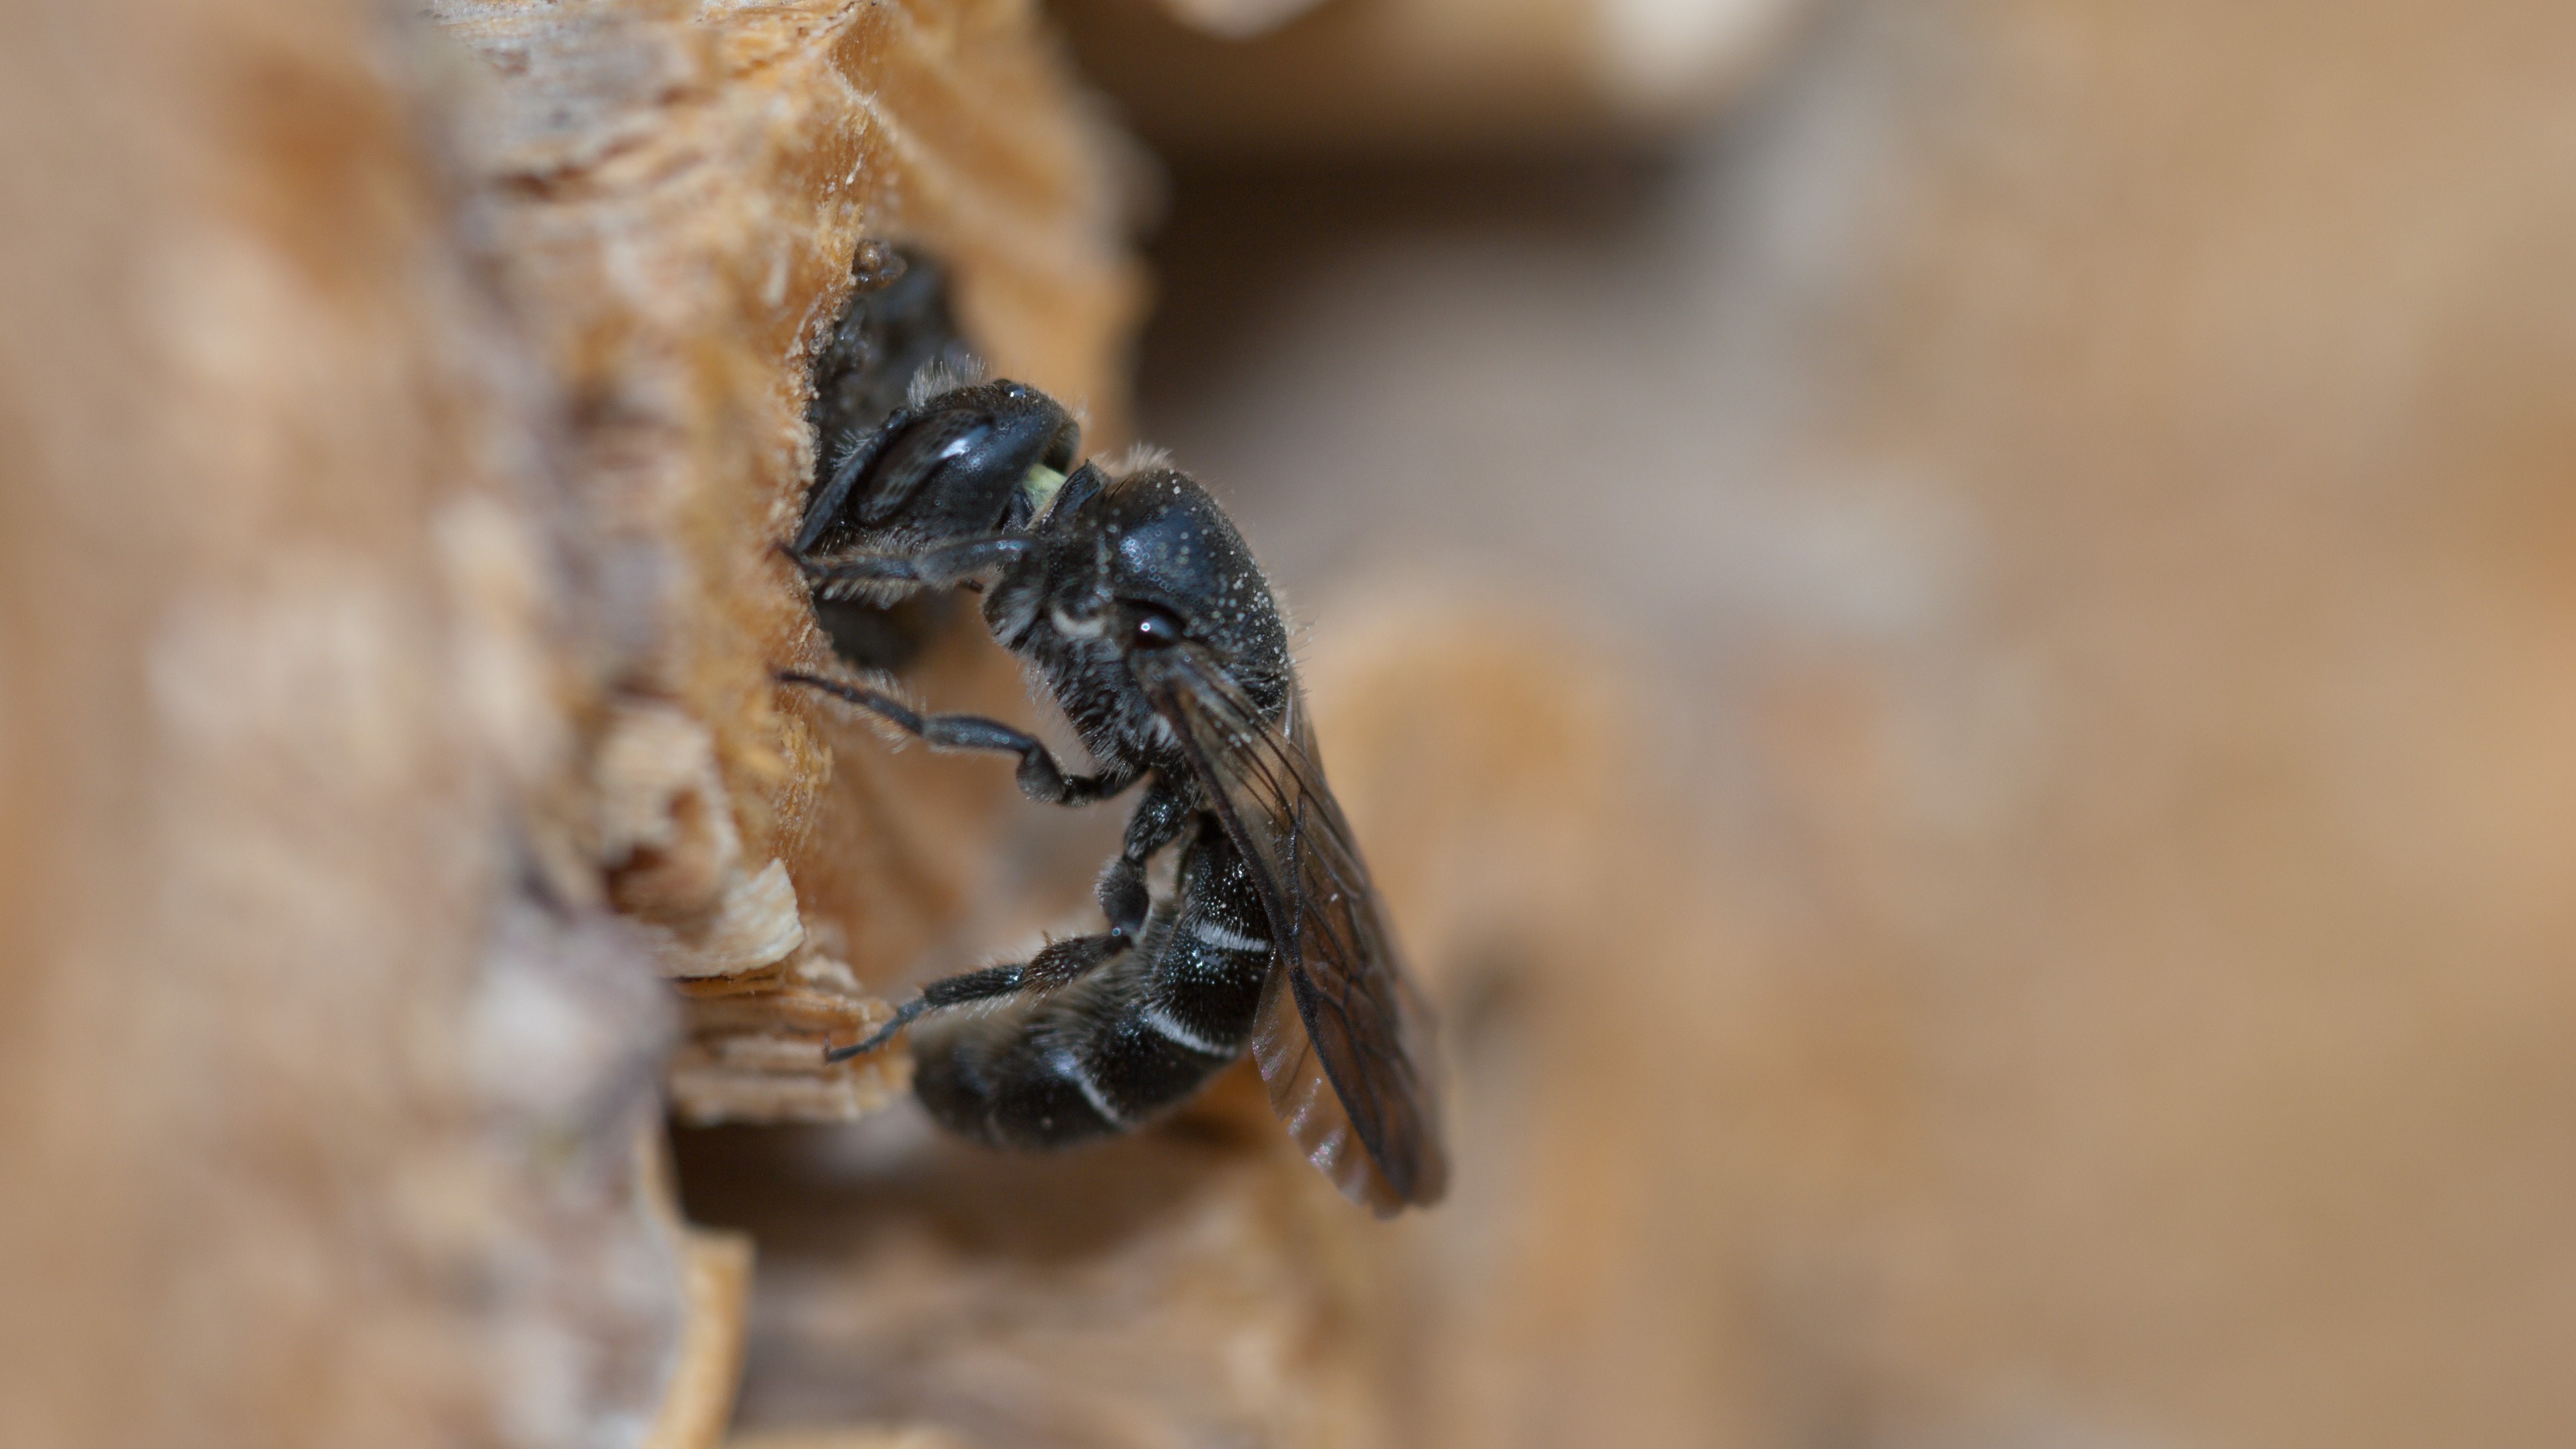 Attract Bees - Cavity nesting bee - cavity nester - mason bee -Small scissor bee